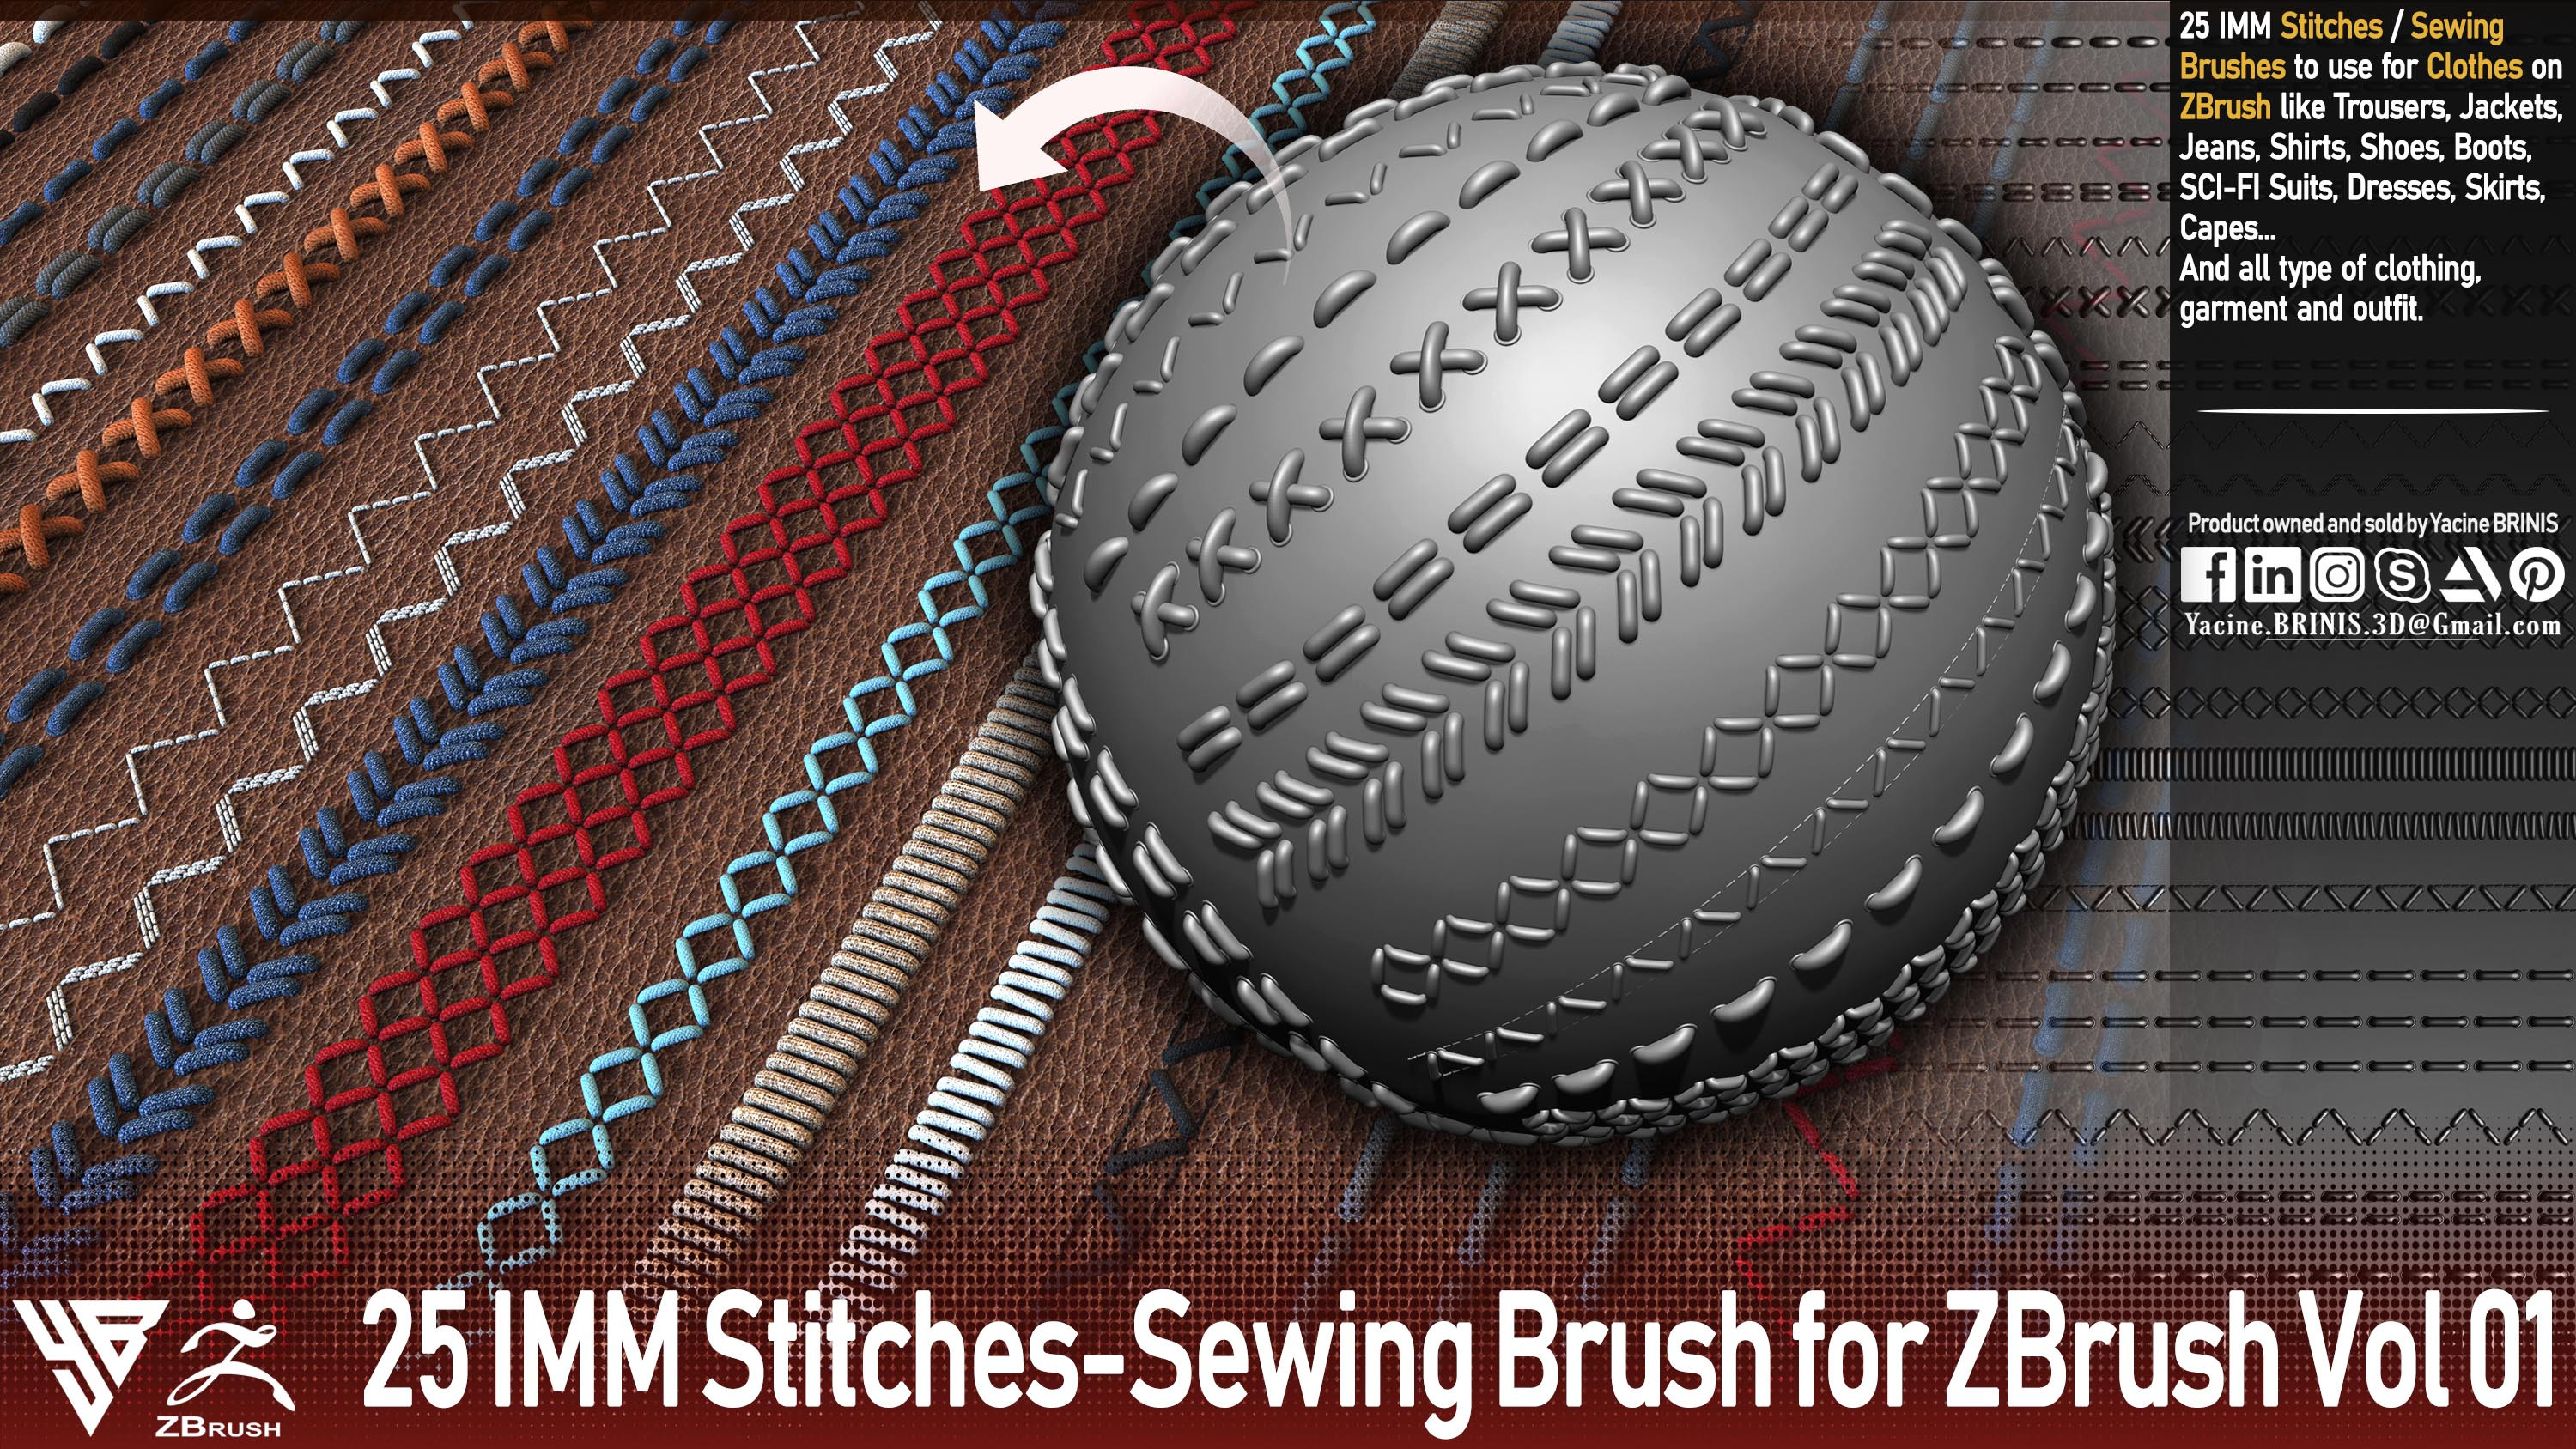 25 IMM Stitches-Sewing Brush for ZBrush Vol 01 By Yacine BRINIS Set 001